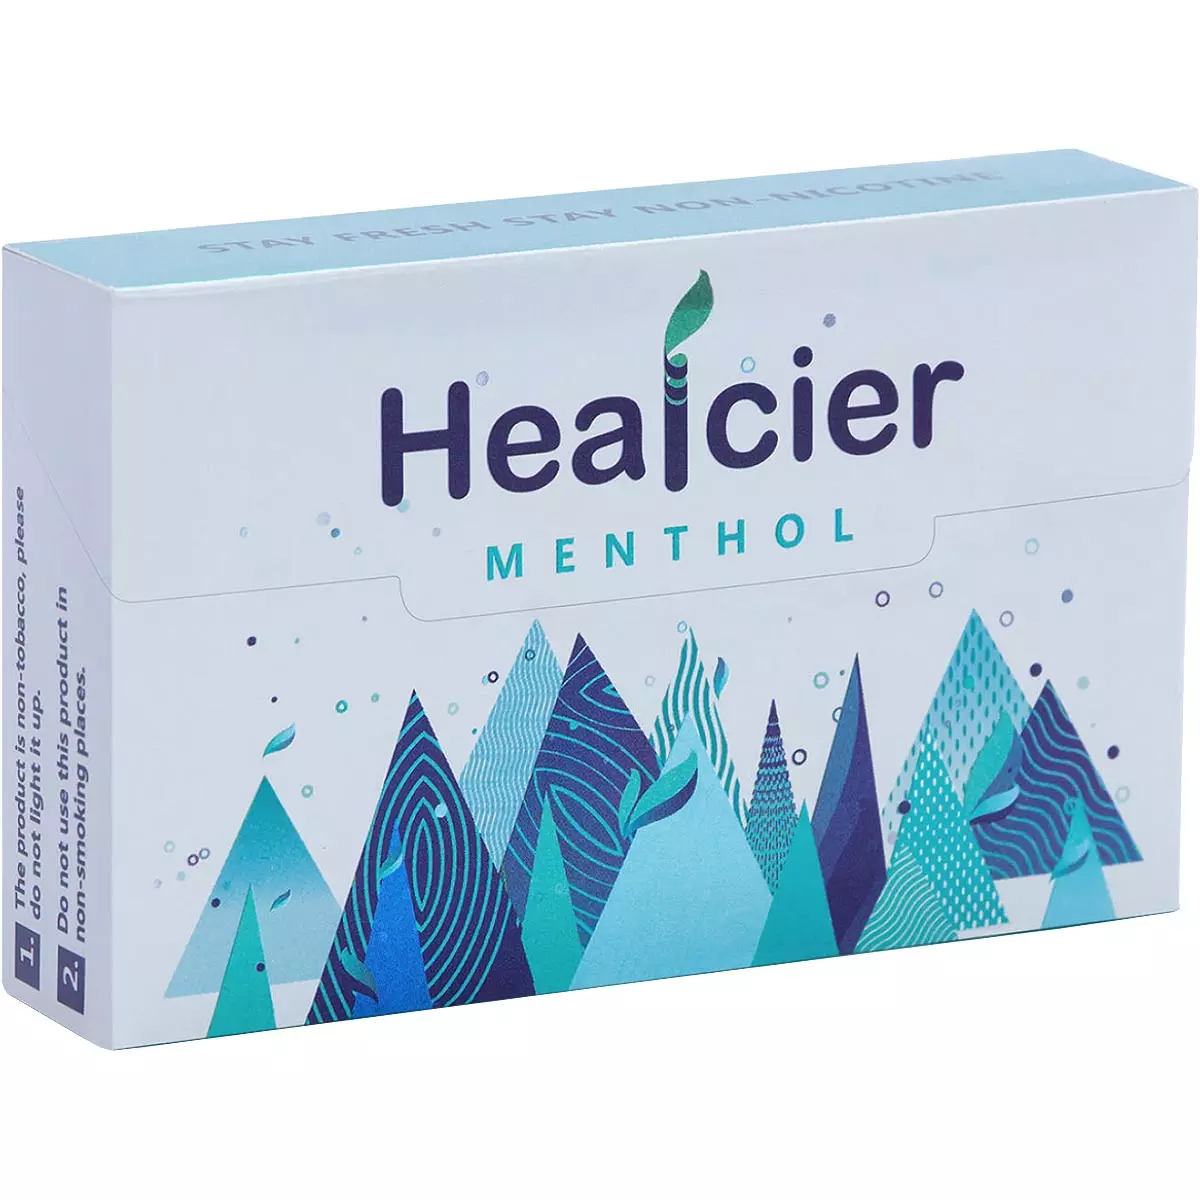 Healcier - Menthol Non-Nicotine